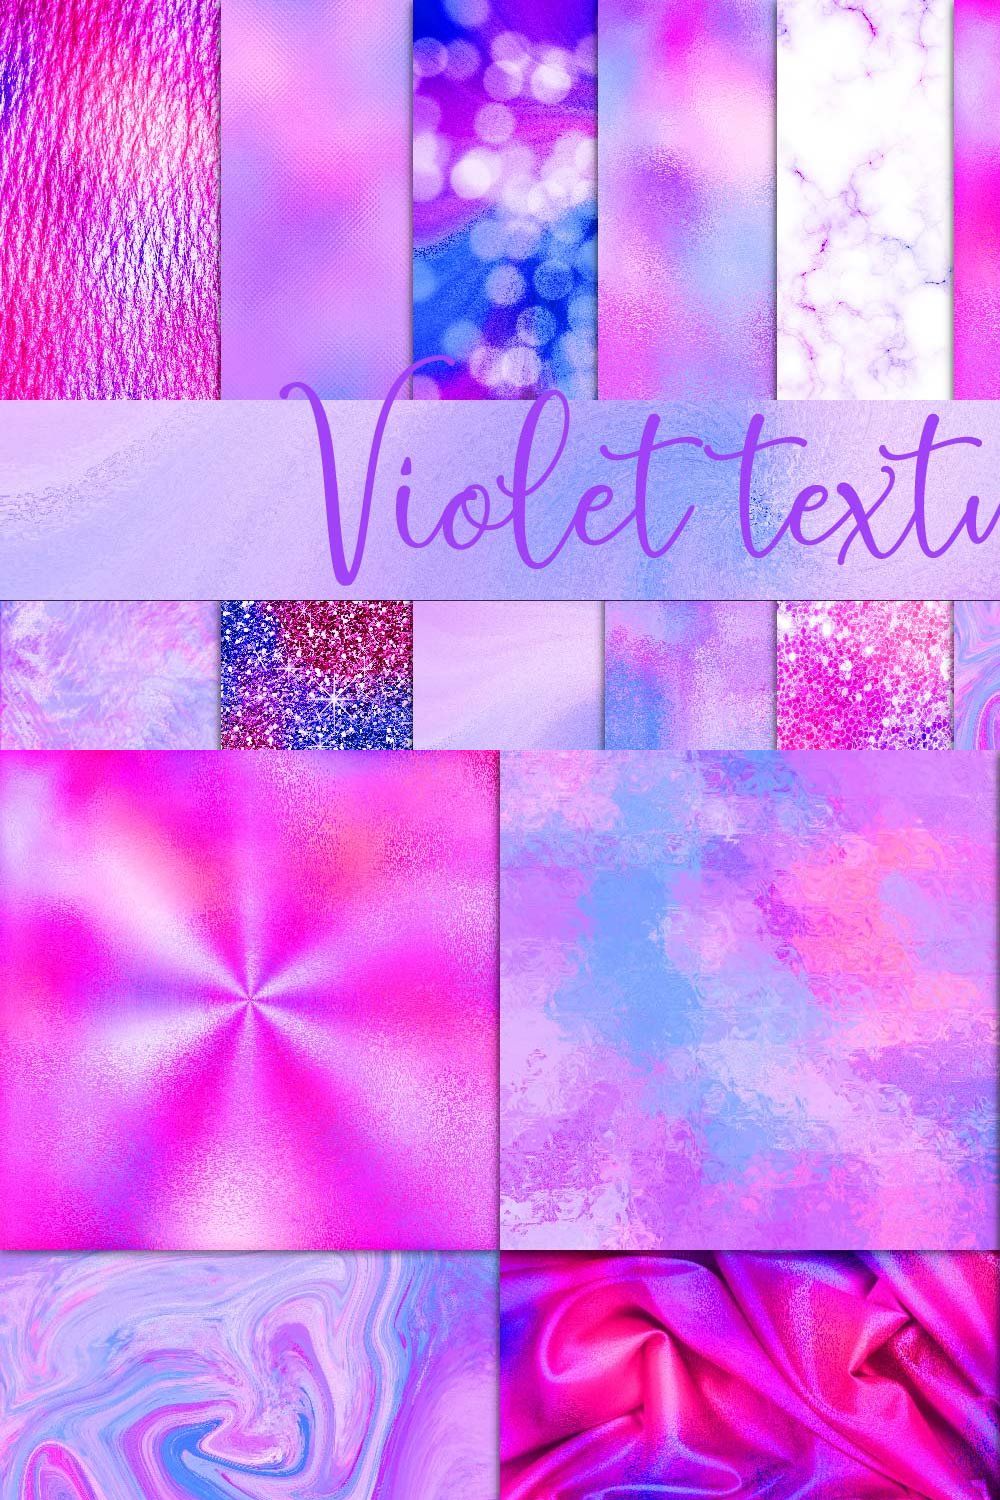 Violet textures digital paper pinterest preview image.